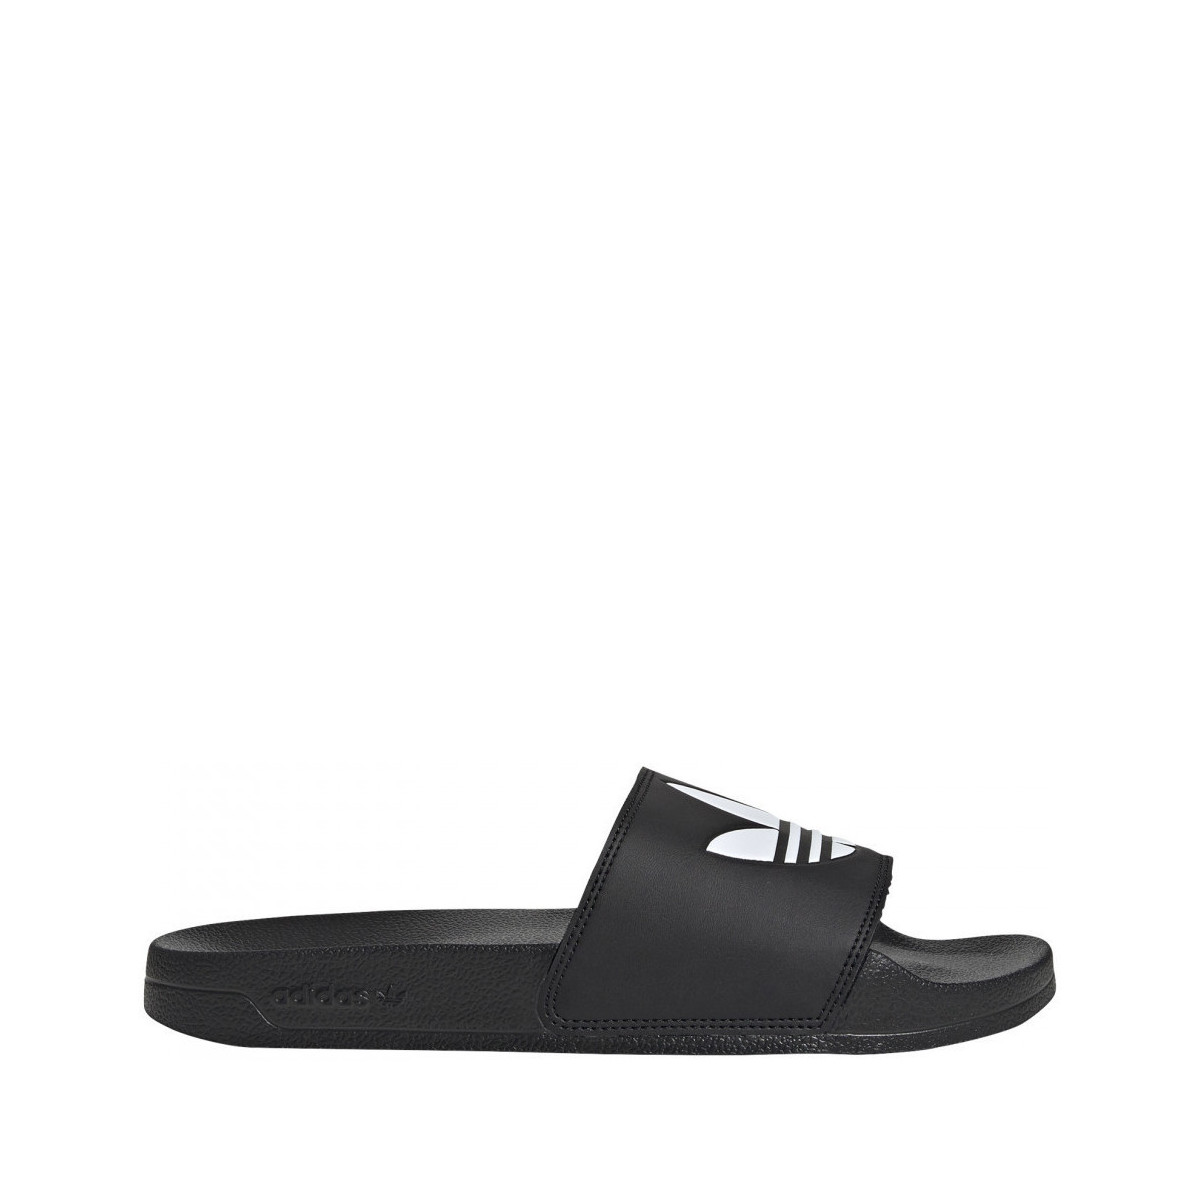 Topánky Muž Sandále adidas Originals Adilette lite Čierna